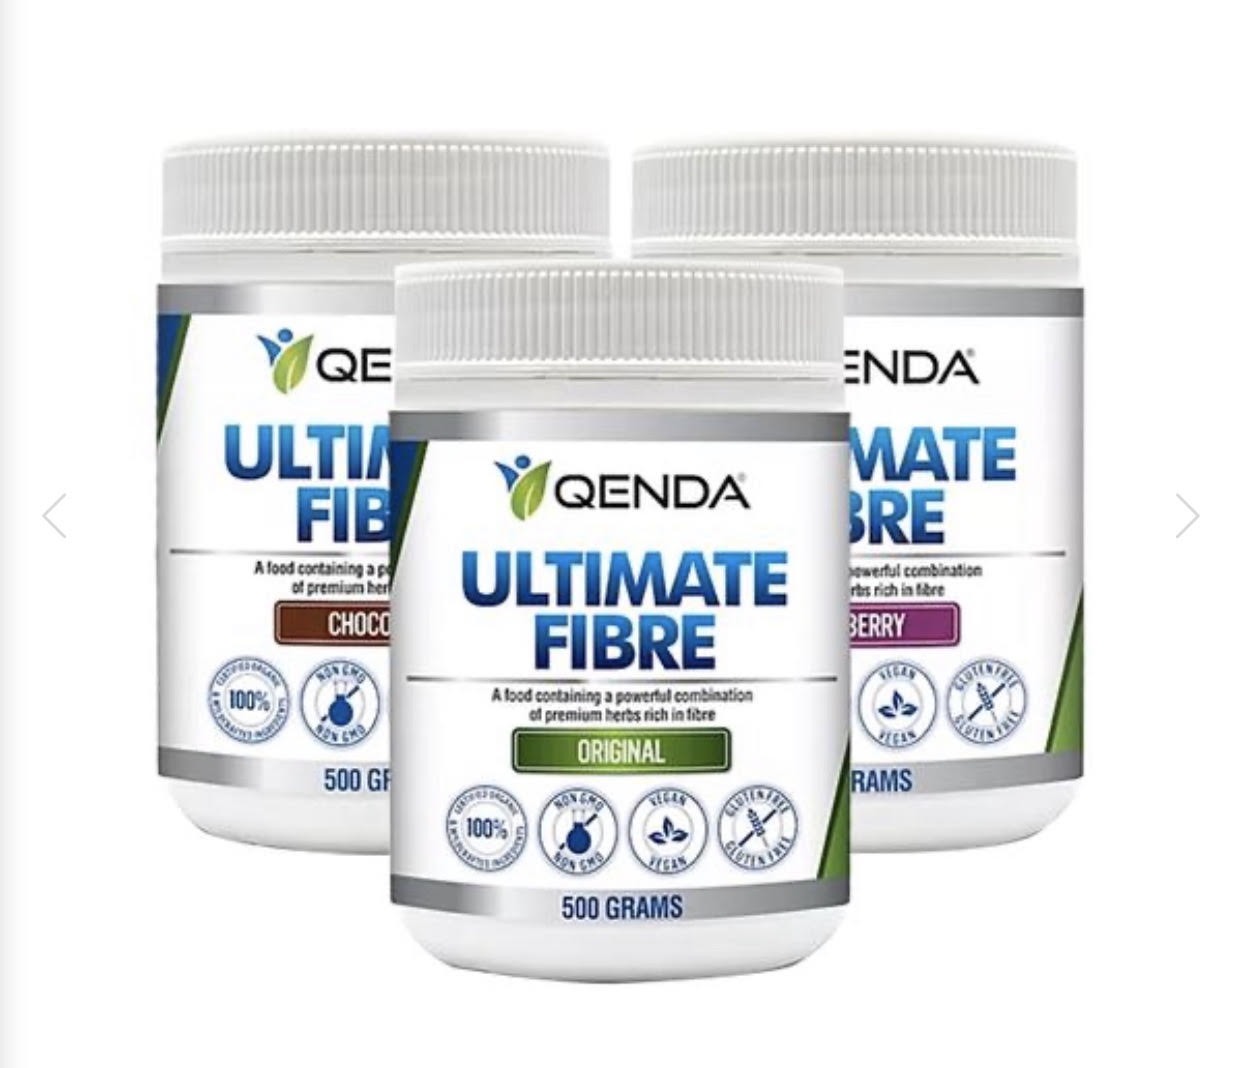 Qenda ultimate fibre3 pack